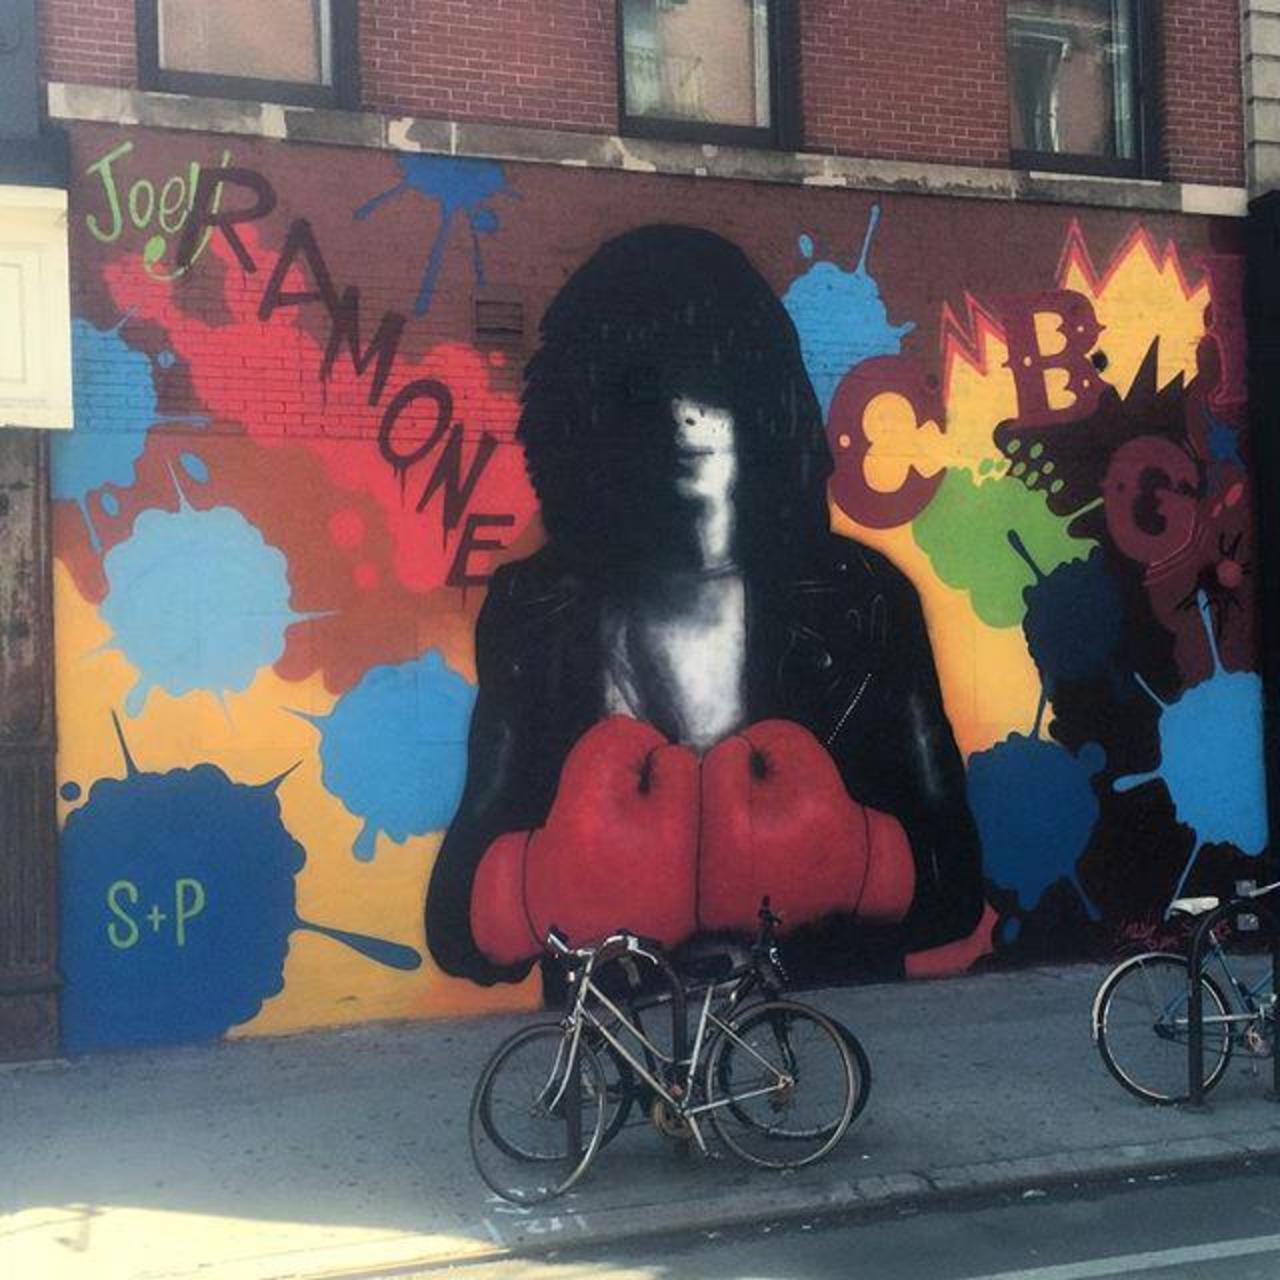 Graffiti Mural
Bleeker and Bowery NYC
@crashone #crashone #graff #graffiti #graffitinyc #outsider #outsiderart #str… http://t.co/vrpN2oTs4l